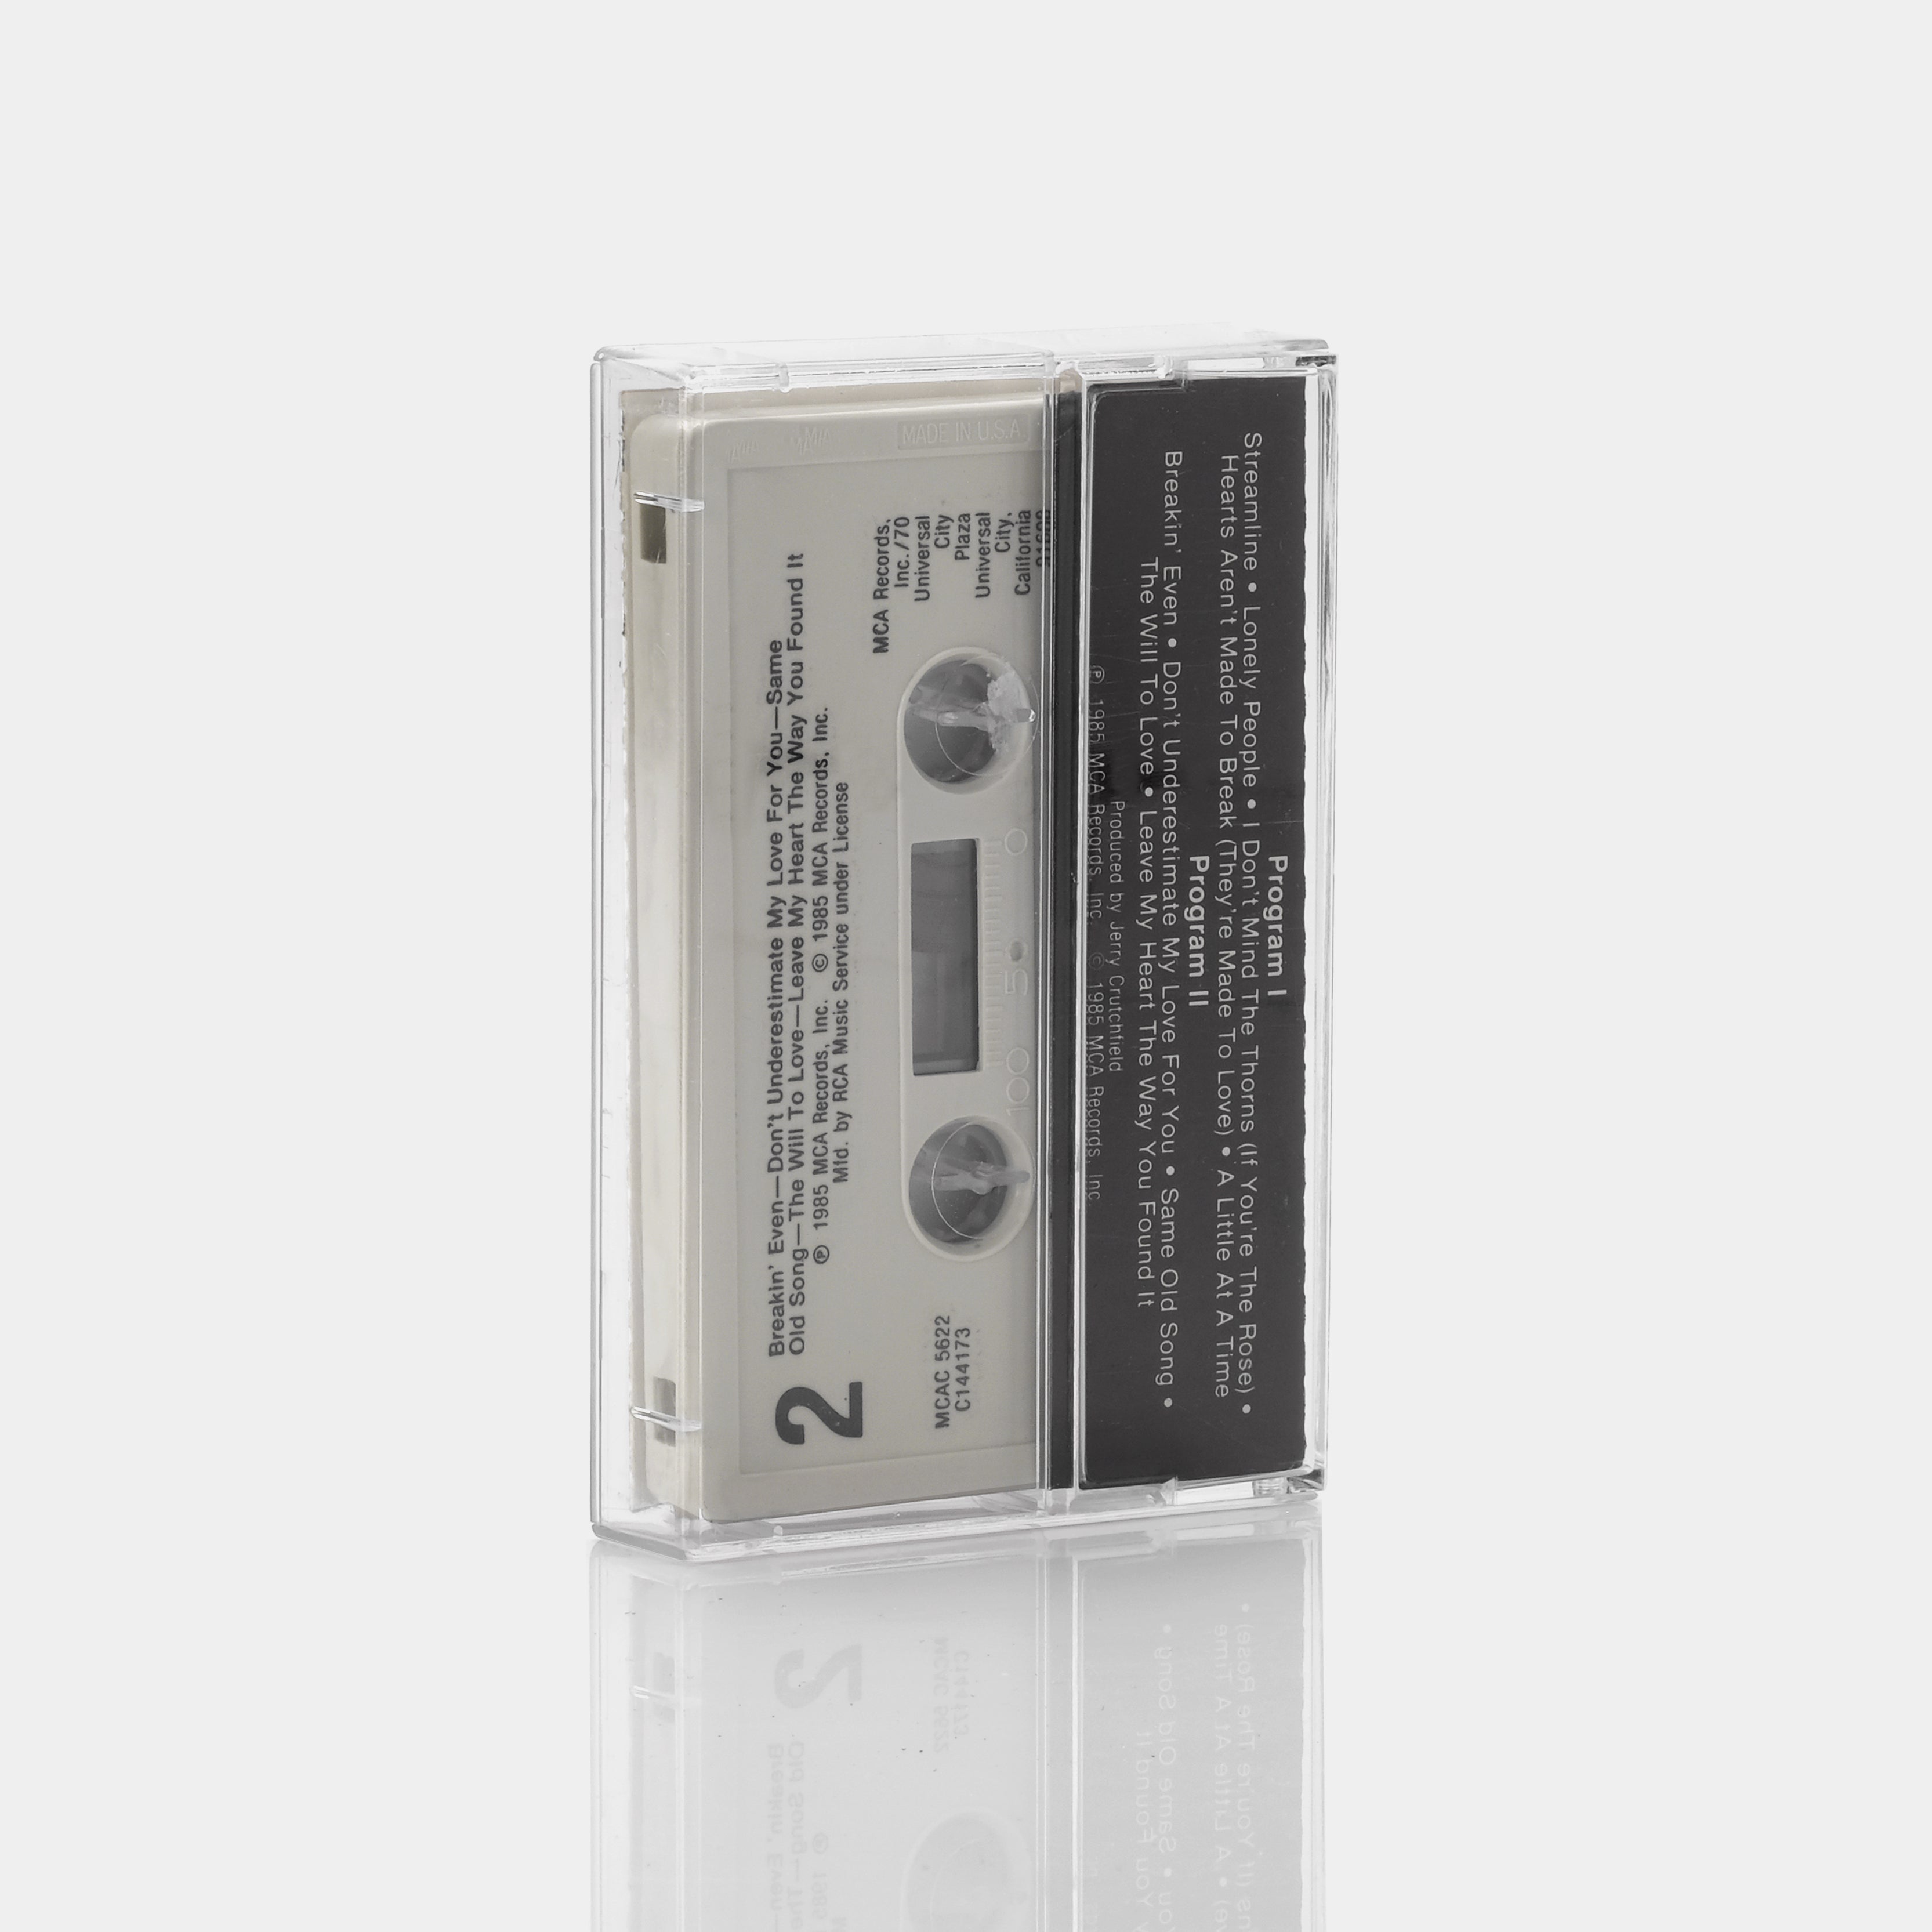 Lee Greenwood - Streamline Cassette Tape